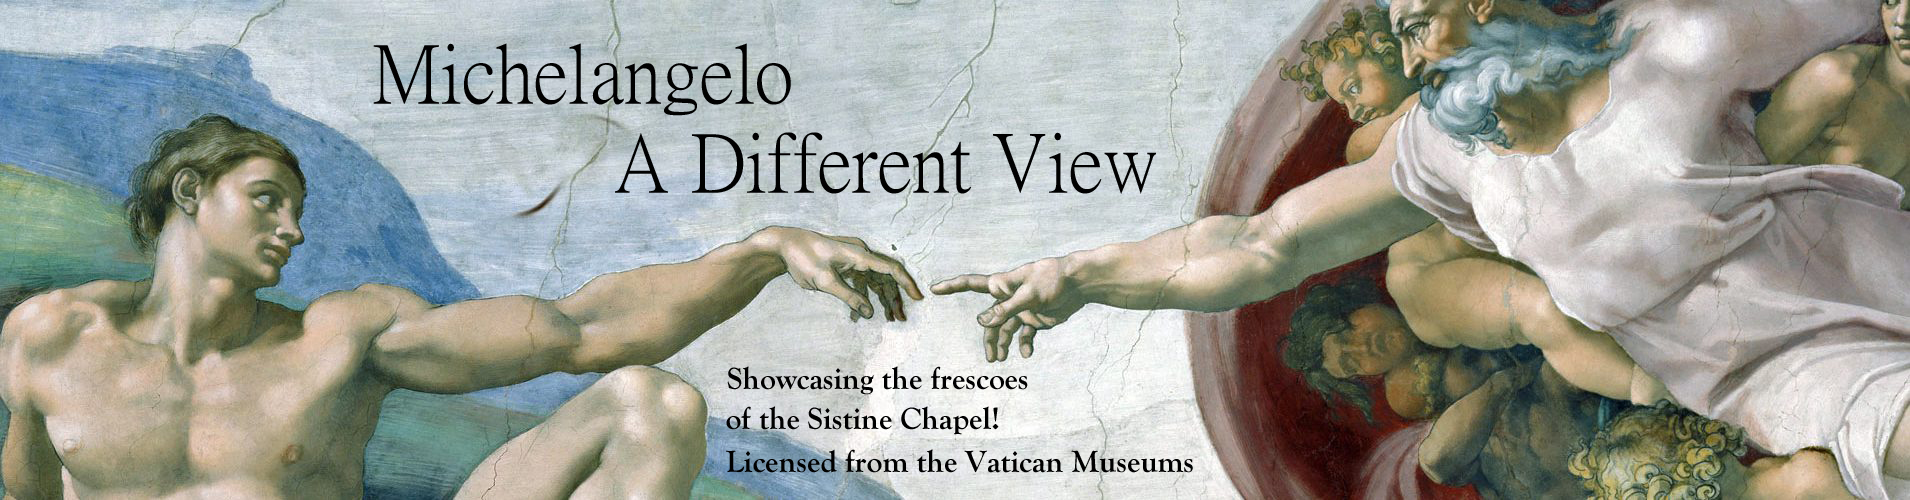 Michelangelo A Different View